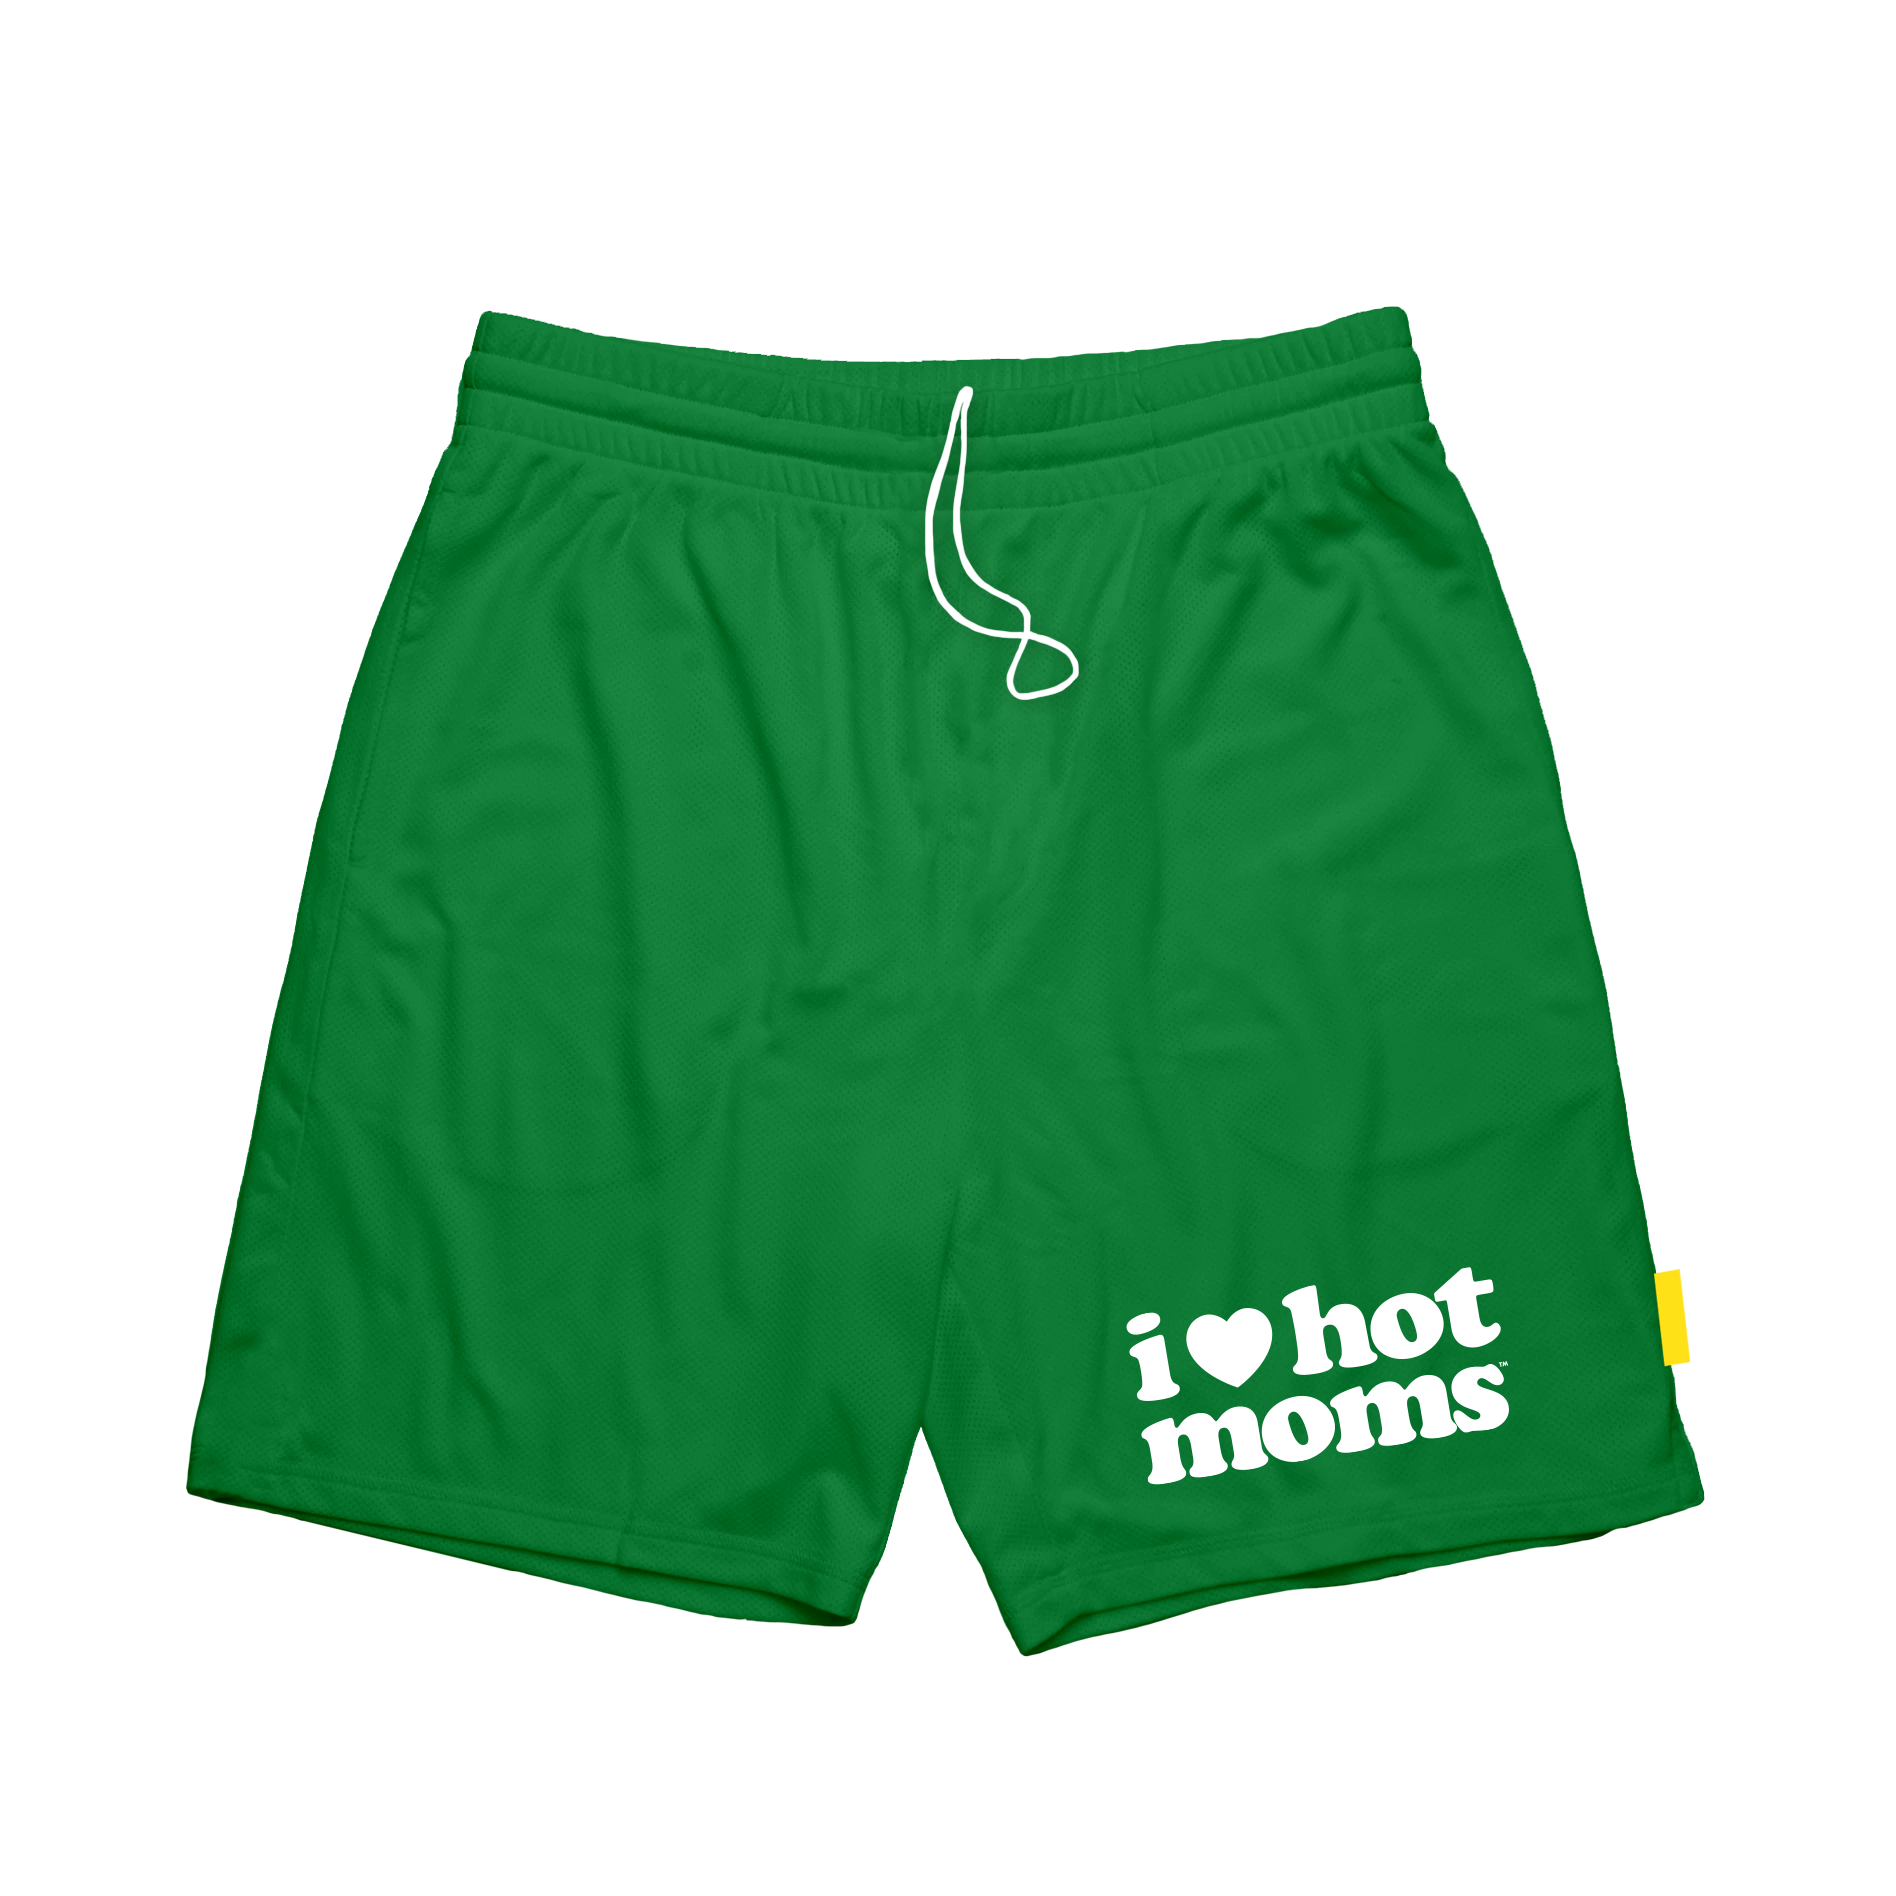 I Heart Hot Moms Green Mesh Shorts – Danny Duncan